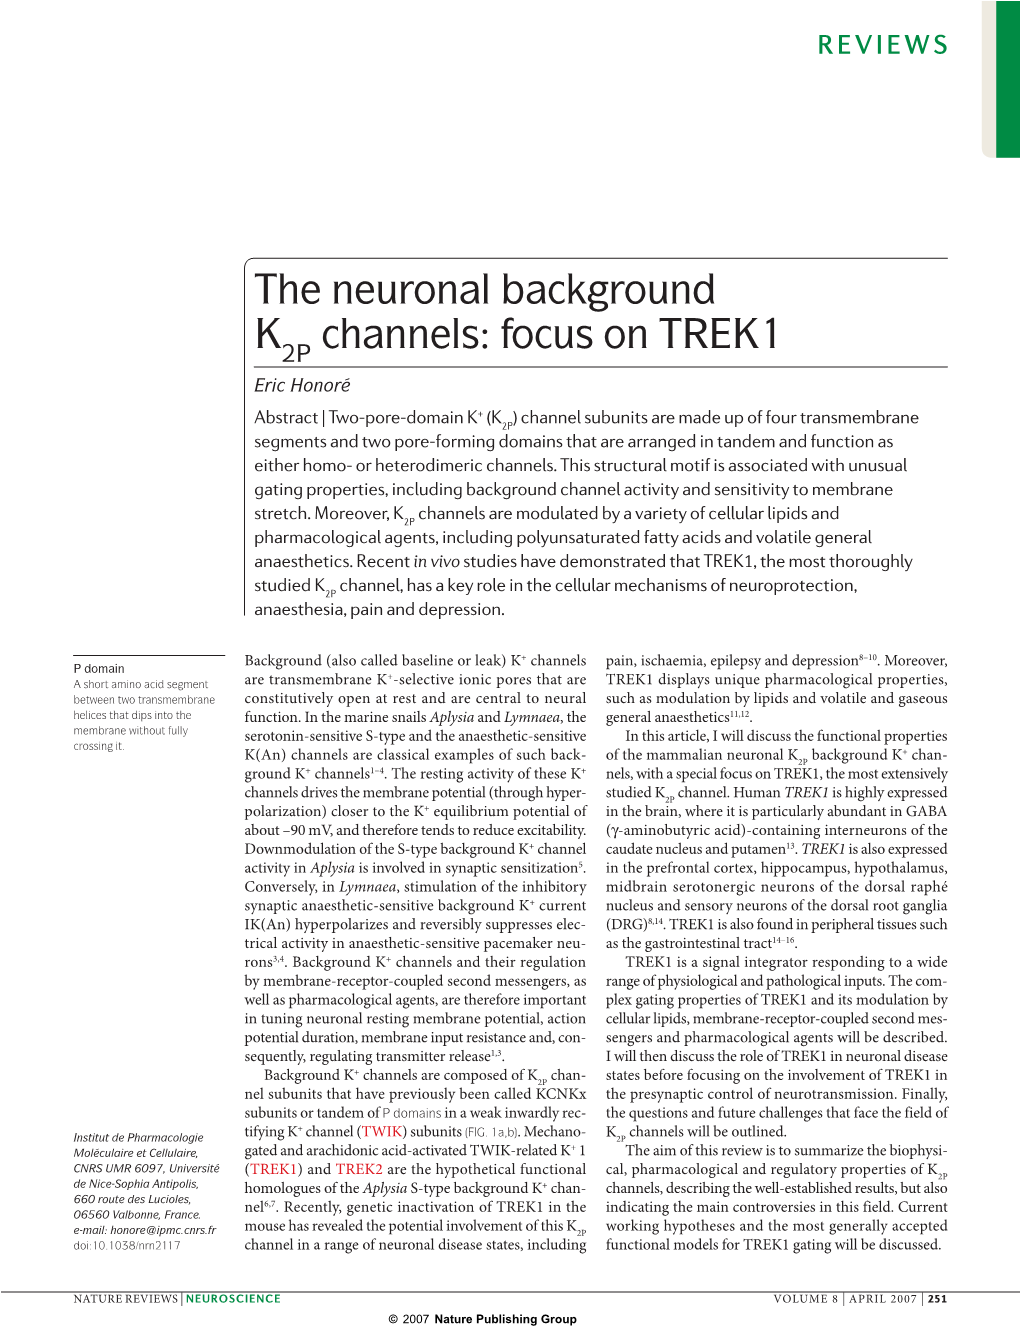 The Neuronal Background K Channels: Focus on TREK1